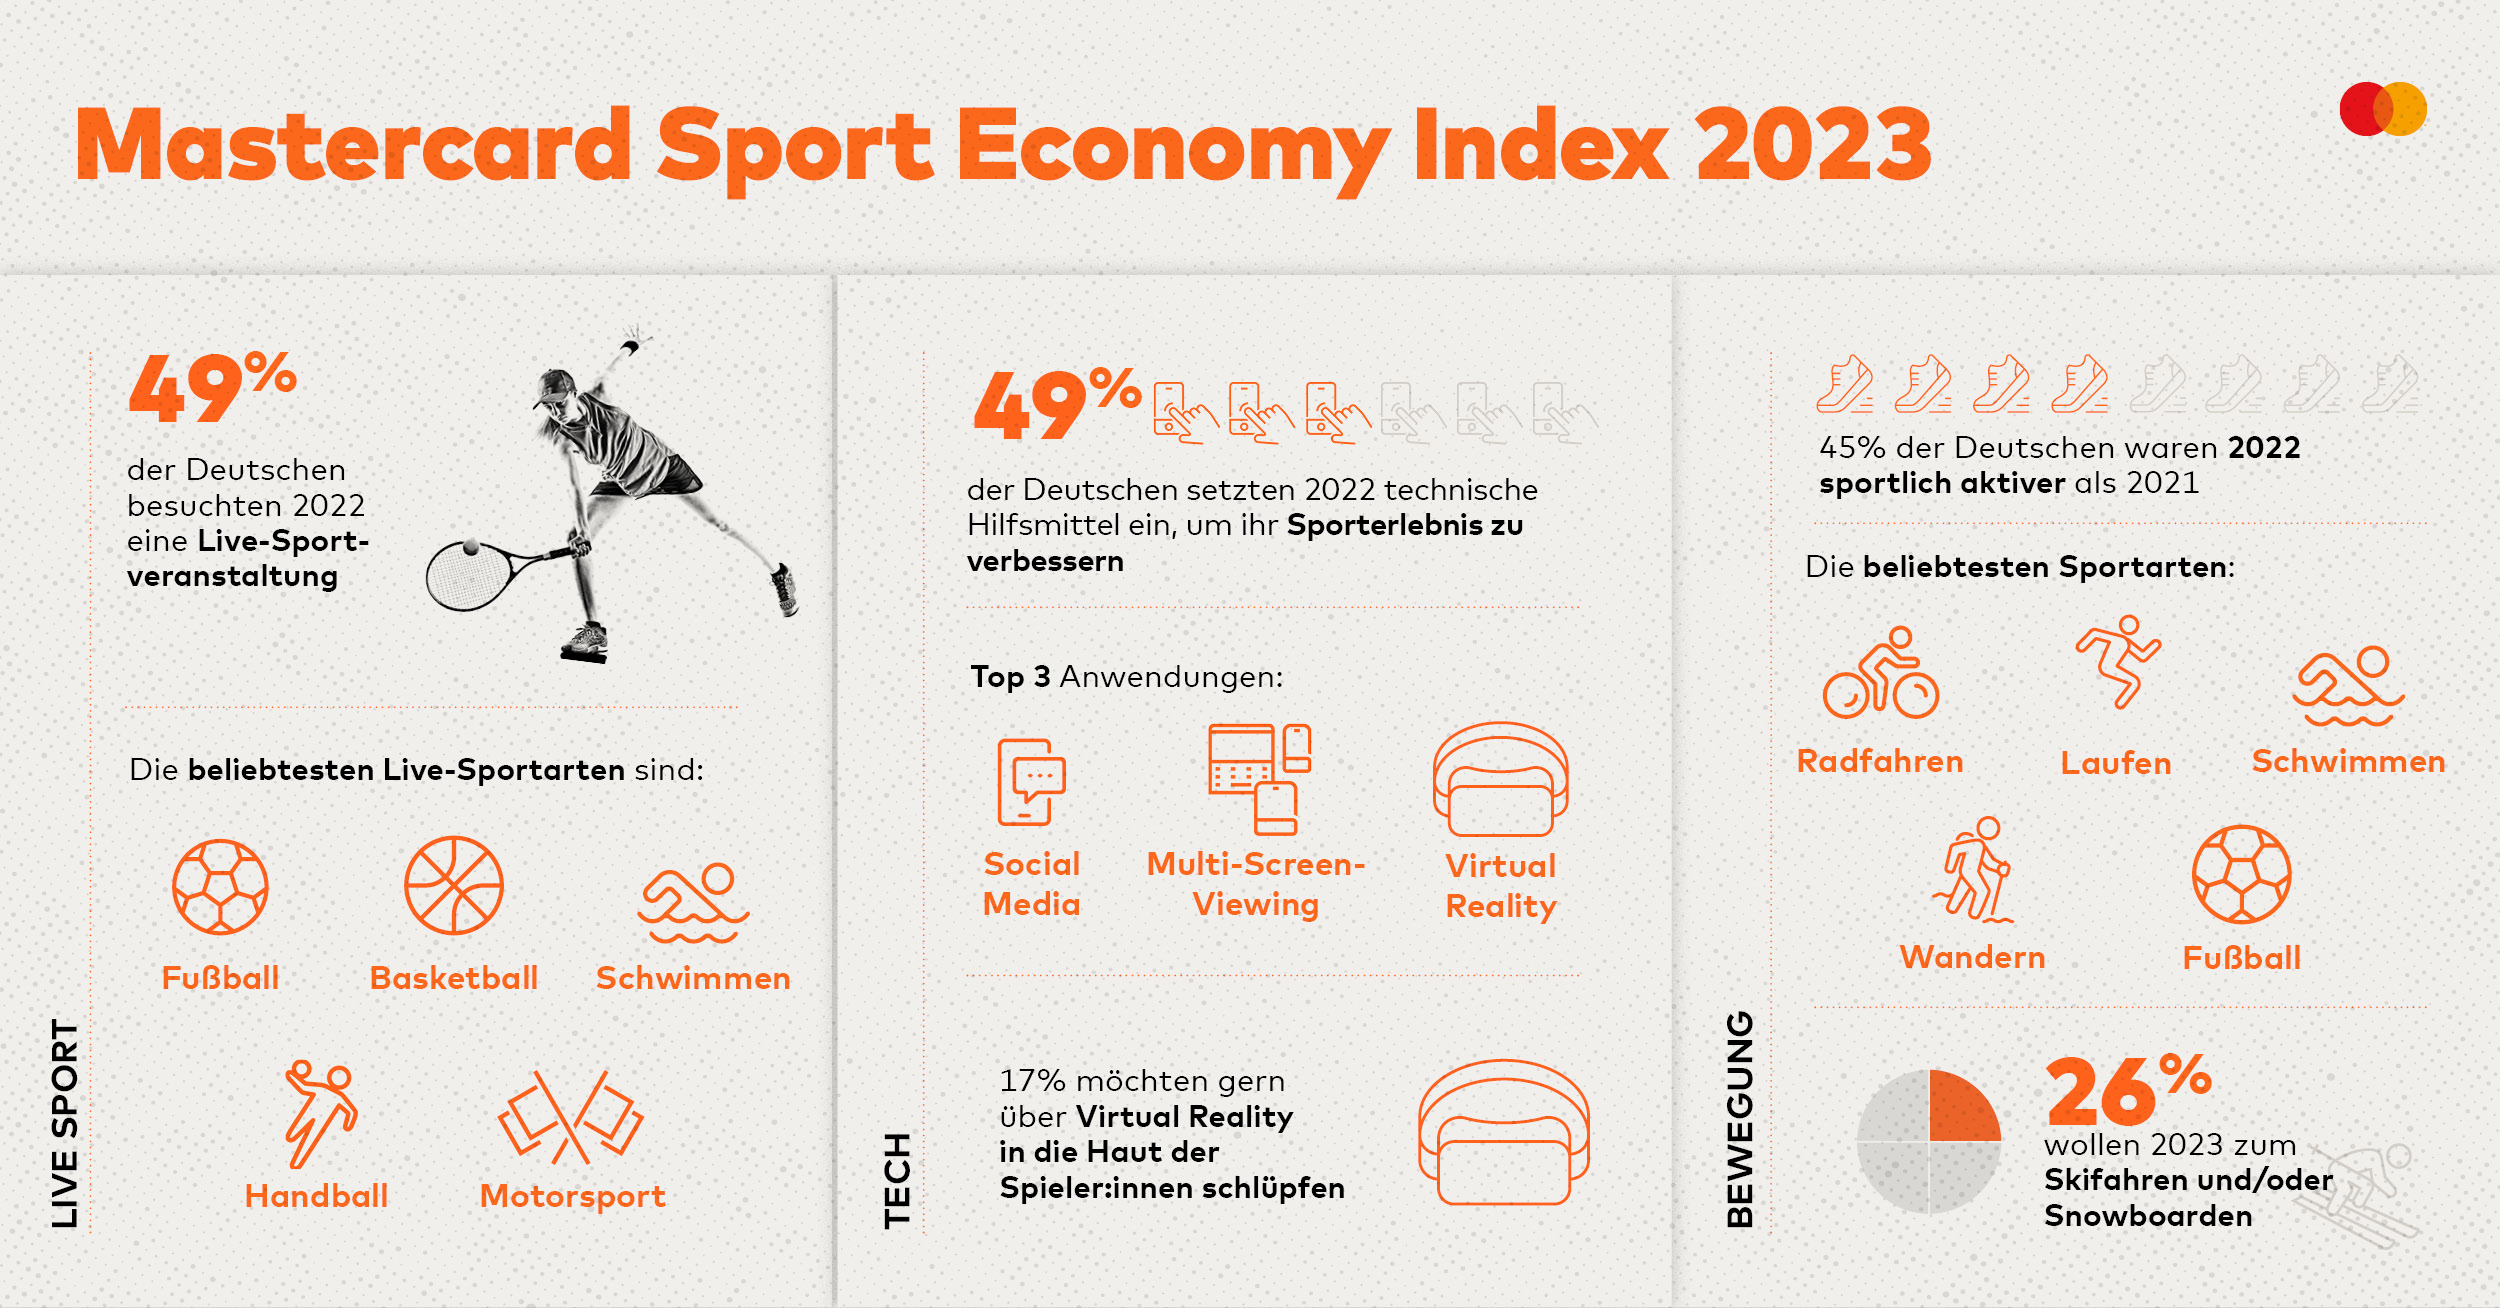 Mastercard Sport Economy Index 2023 im Überblick